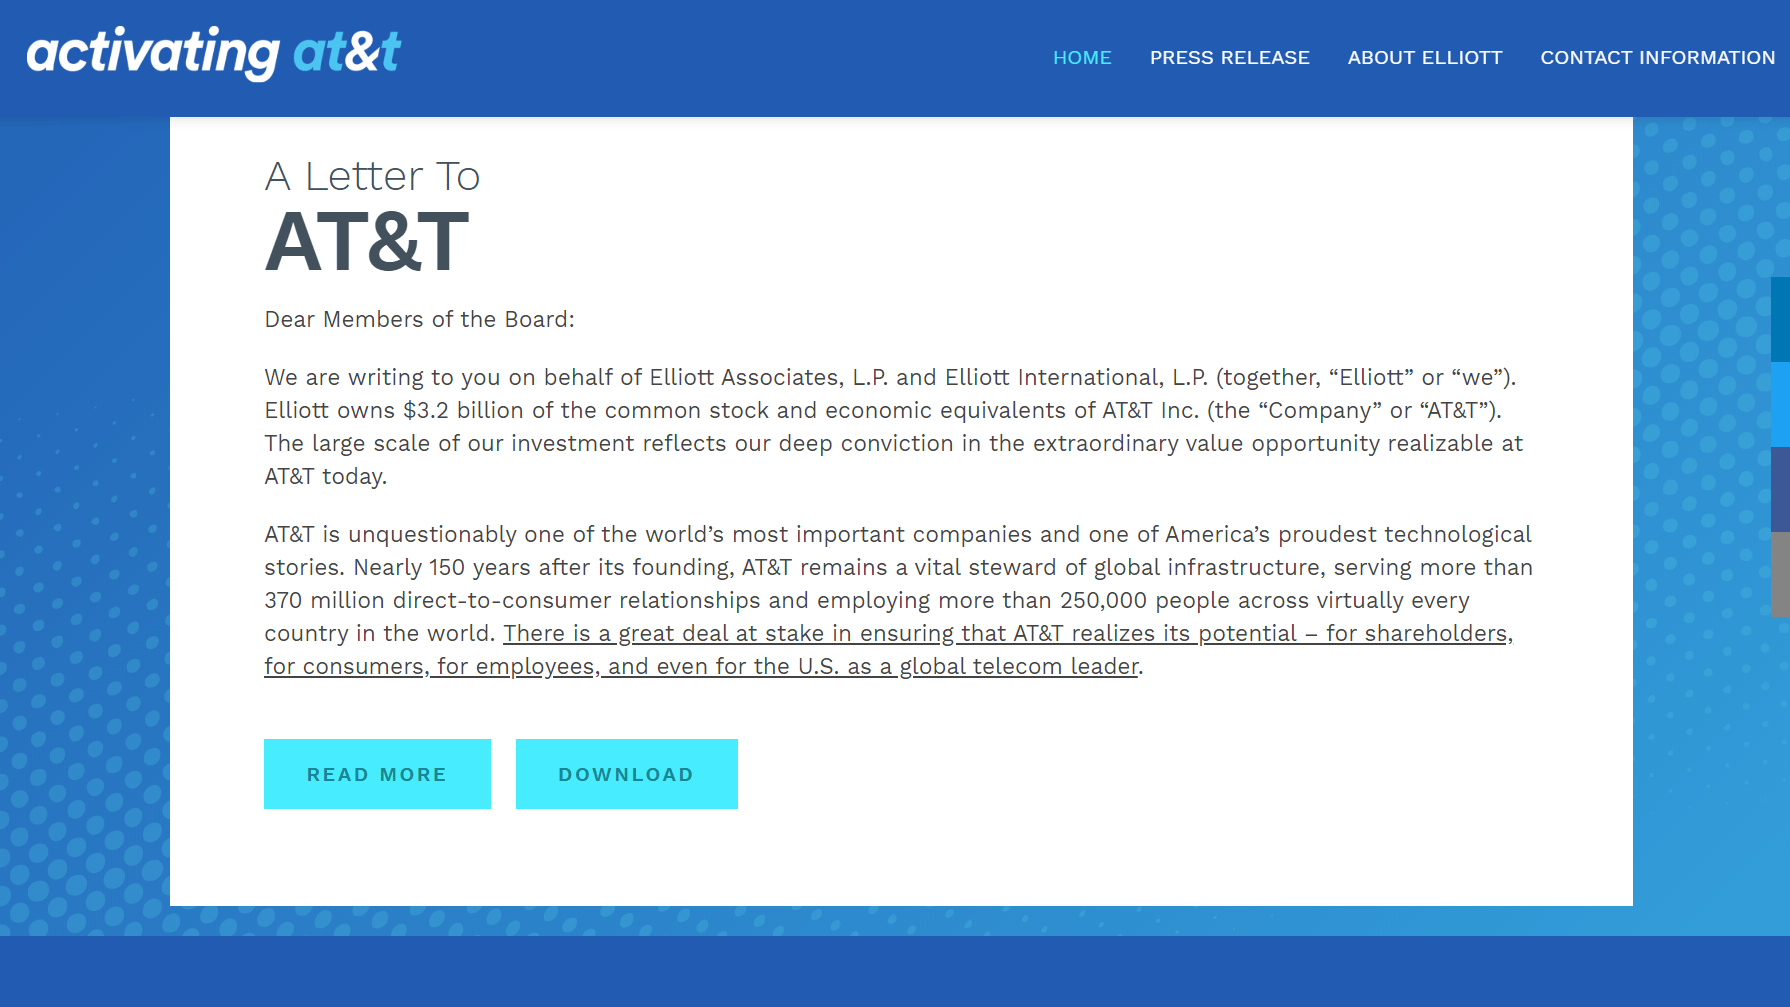 You can download the full letter at https://activatingatt.com